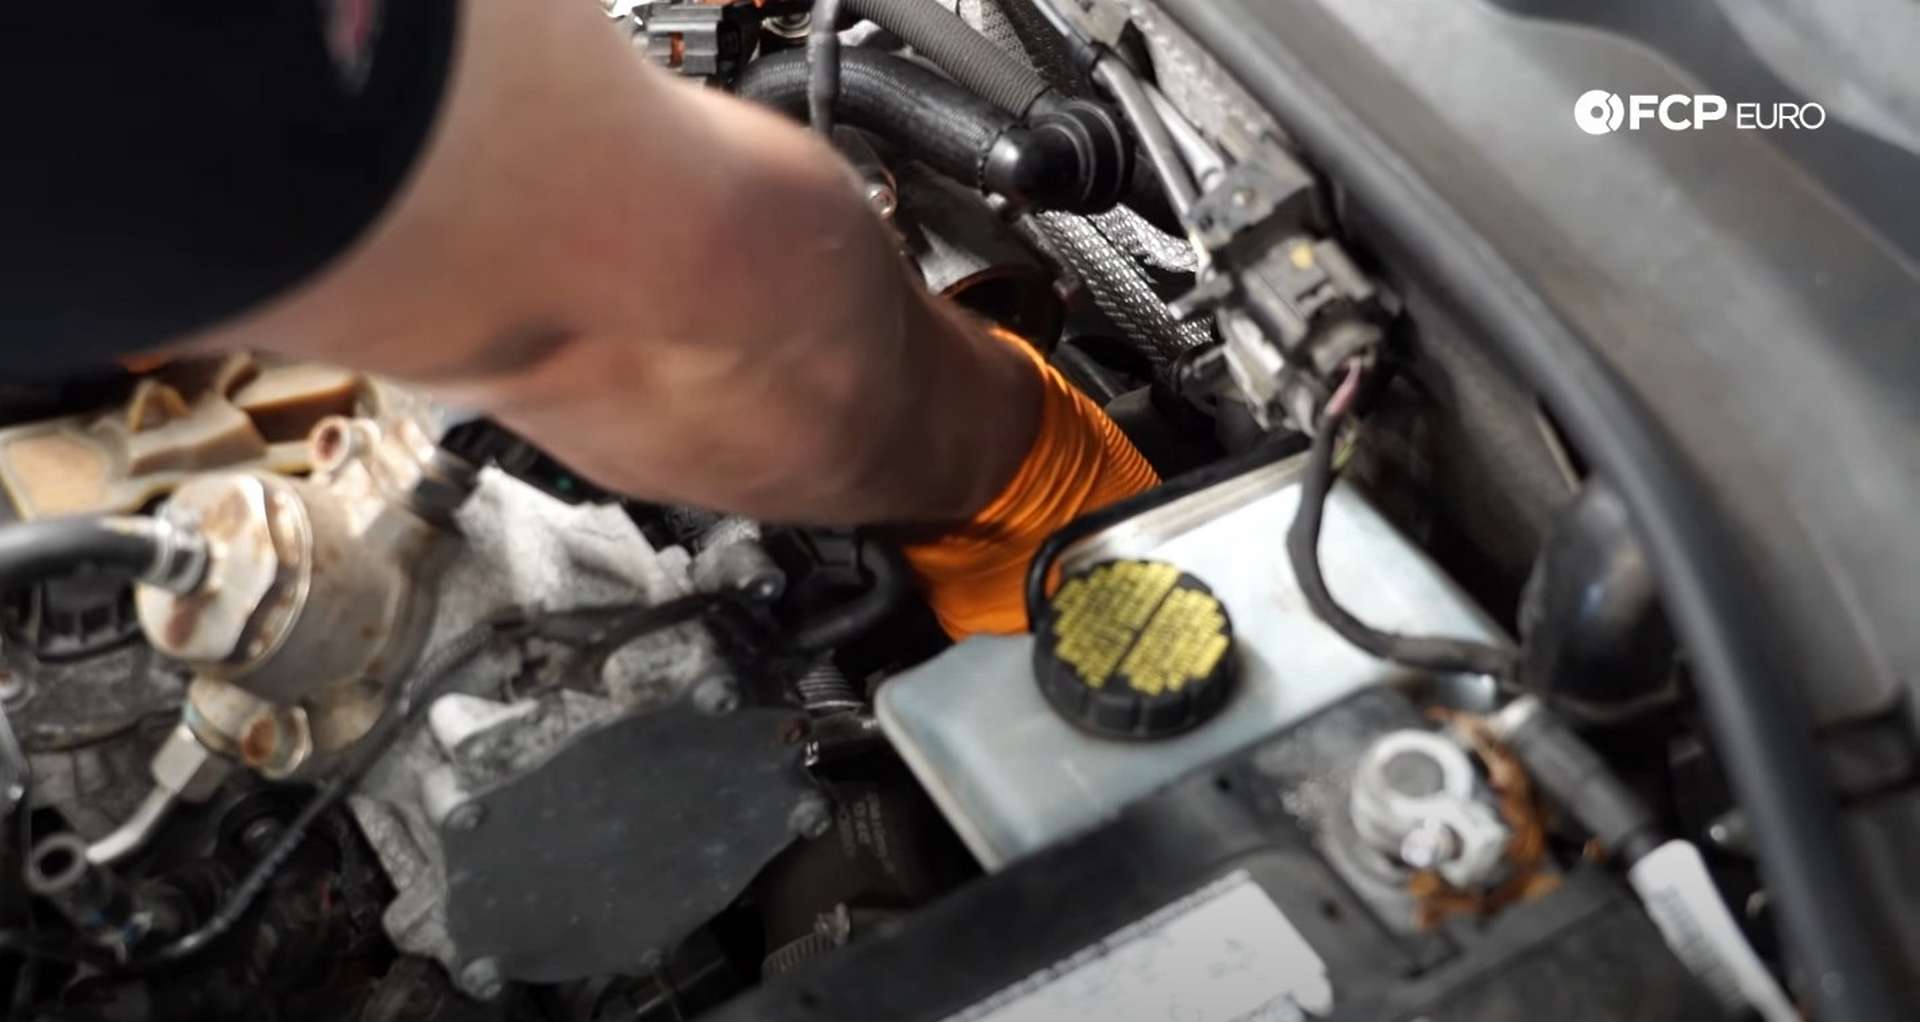 DIY MK7 VW GTI Turbocharger Upgrade unplugging the wastegate solenoid